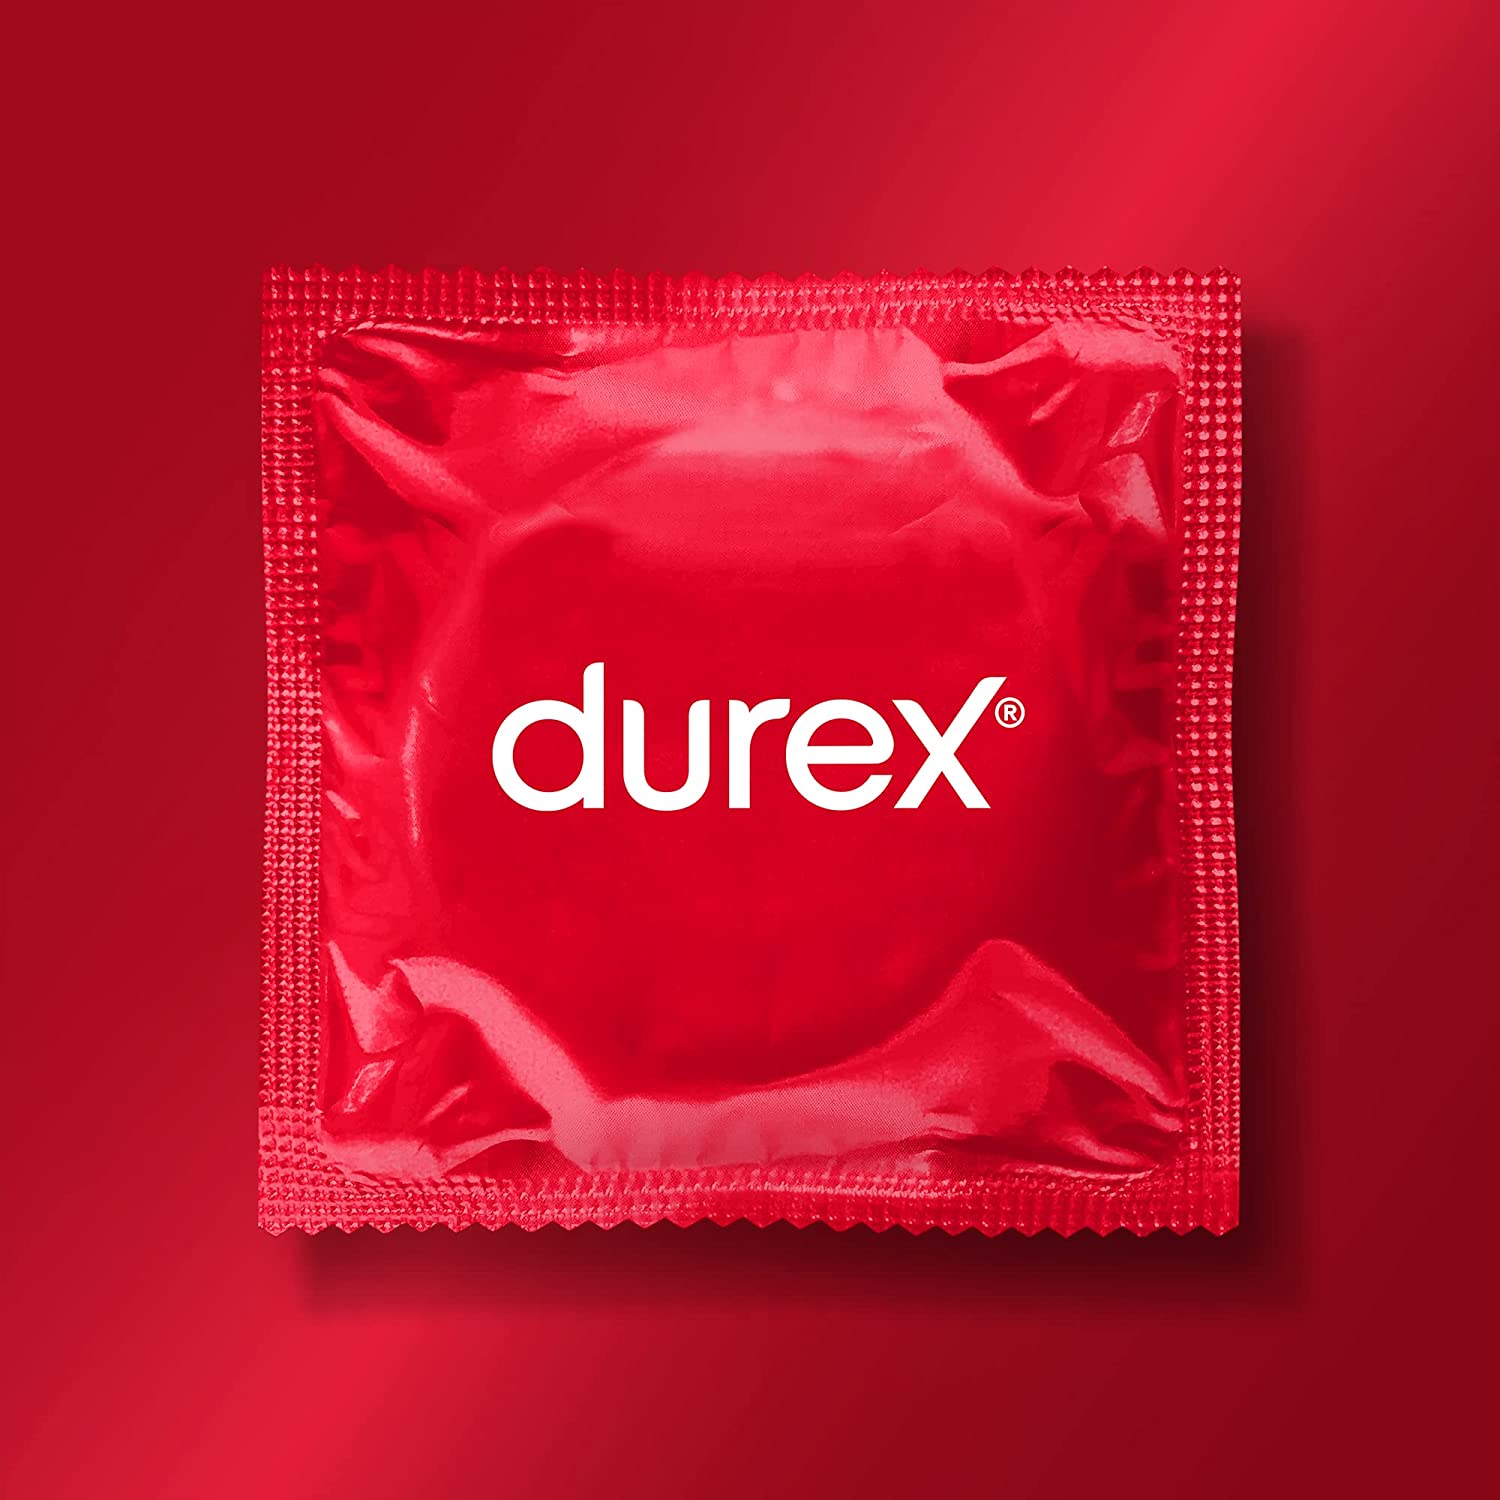 Durex Thin Feel Condoms, Pack of 6 - Healthxpress.ie